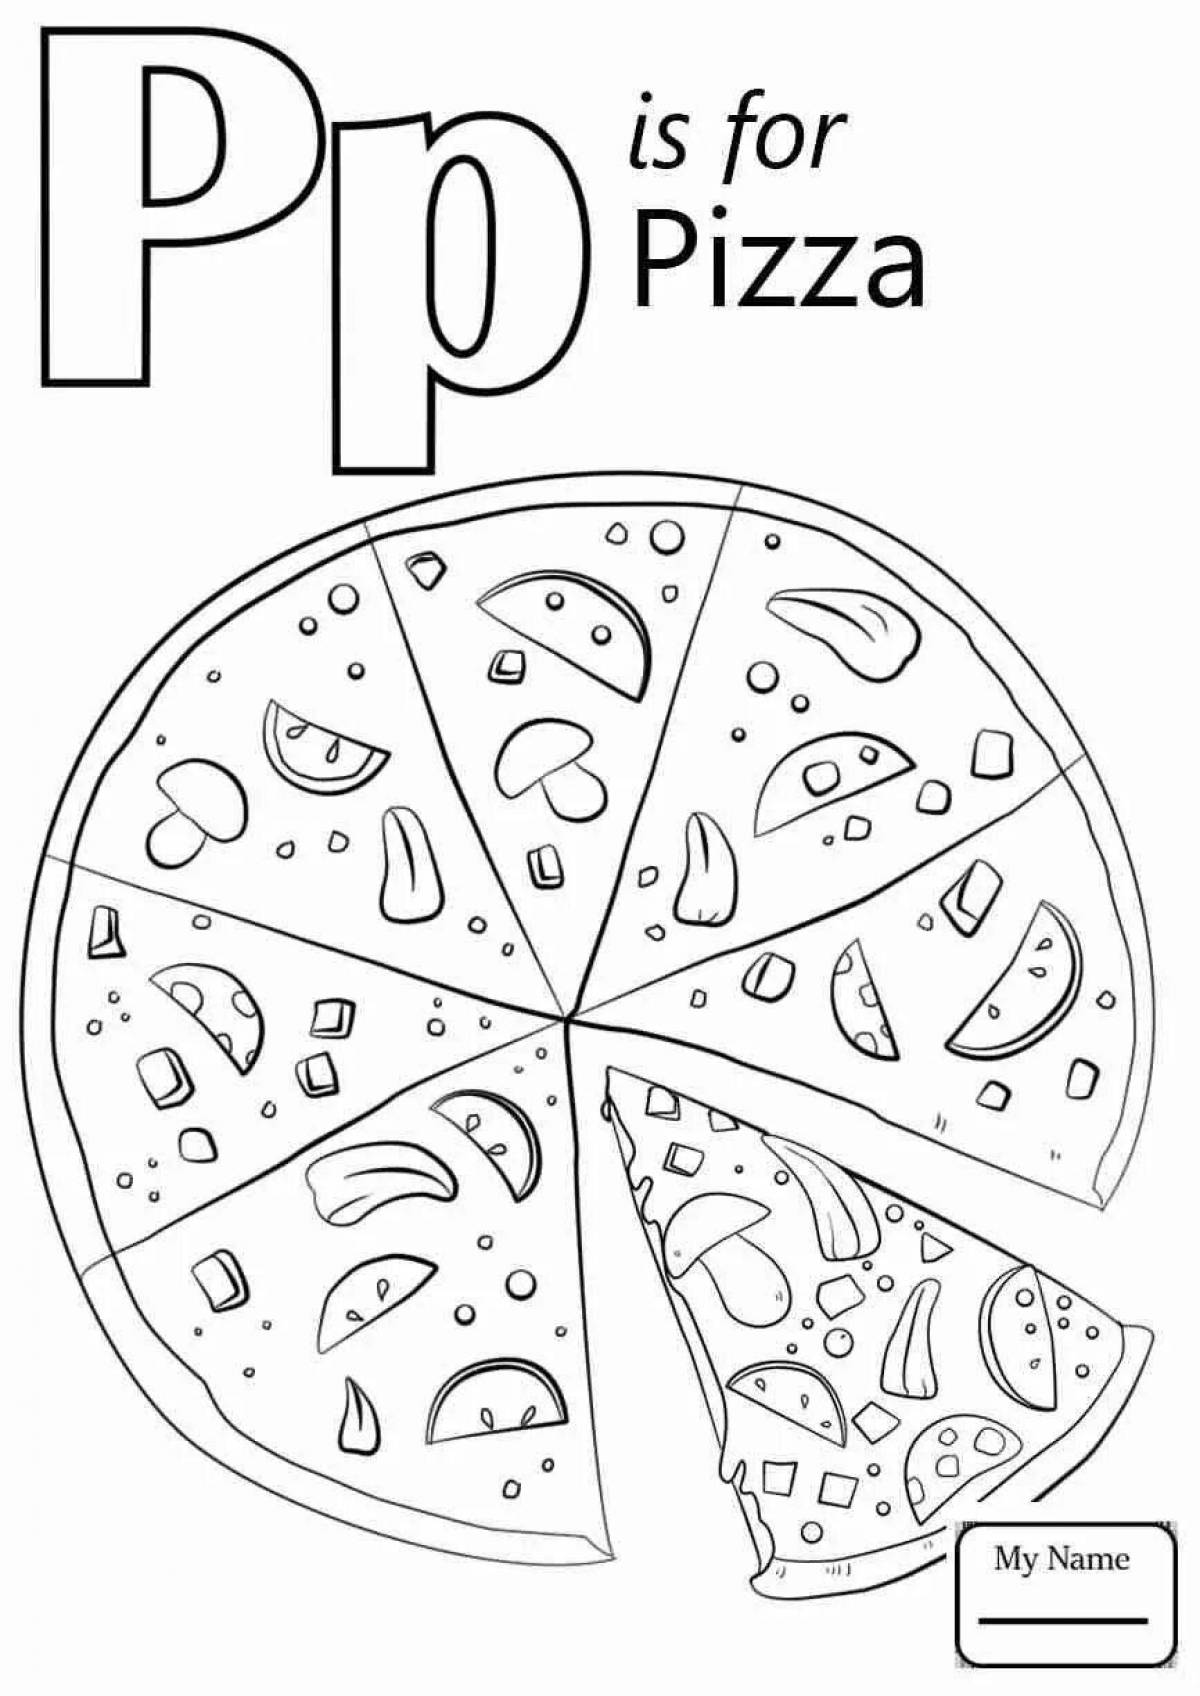 Delicious sausage pizza coloring page